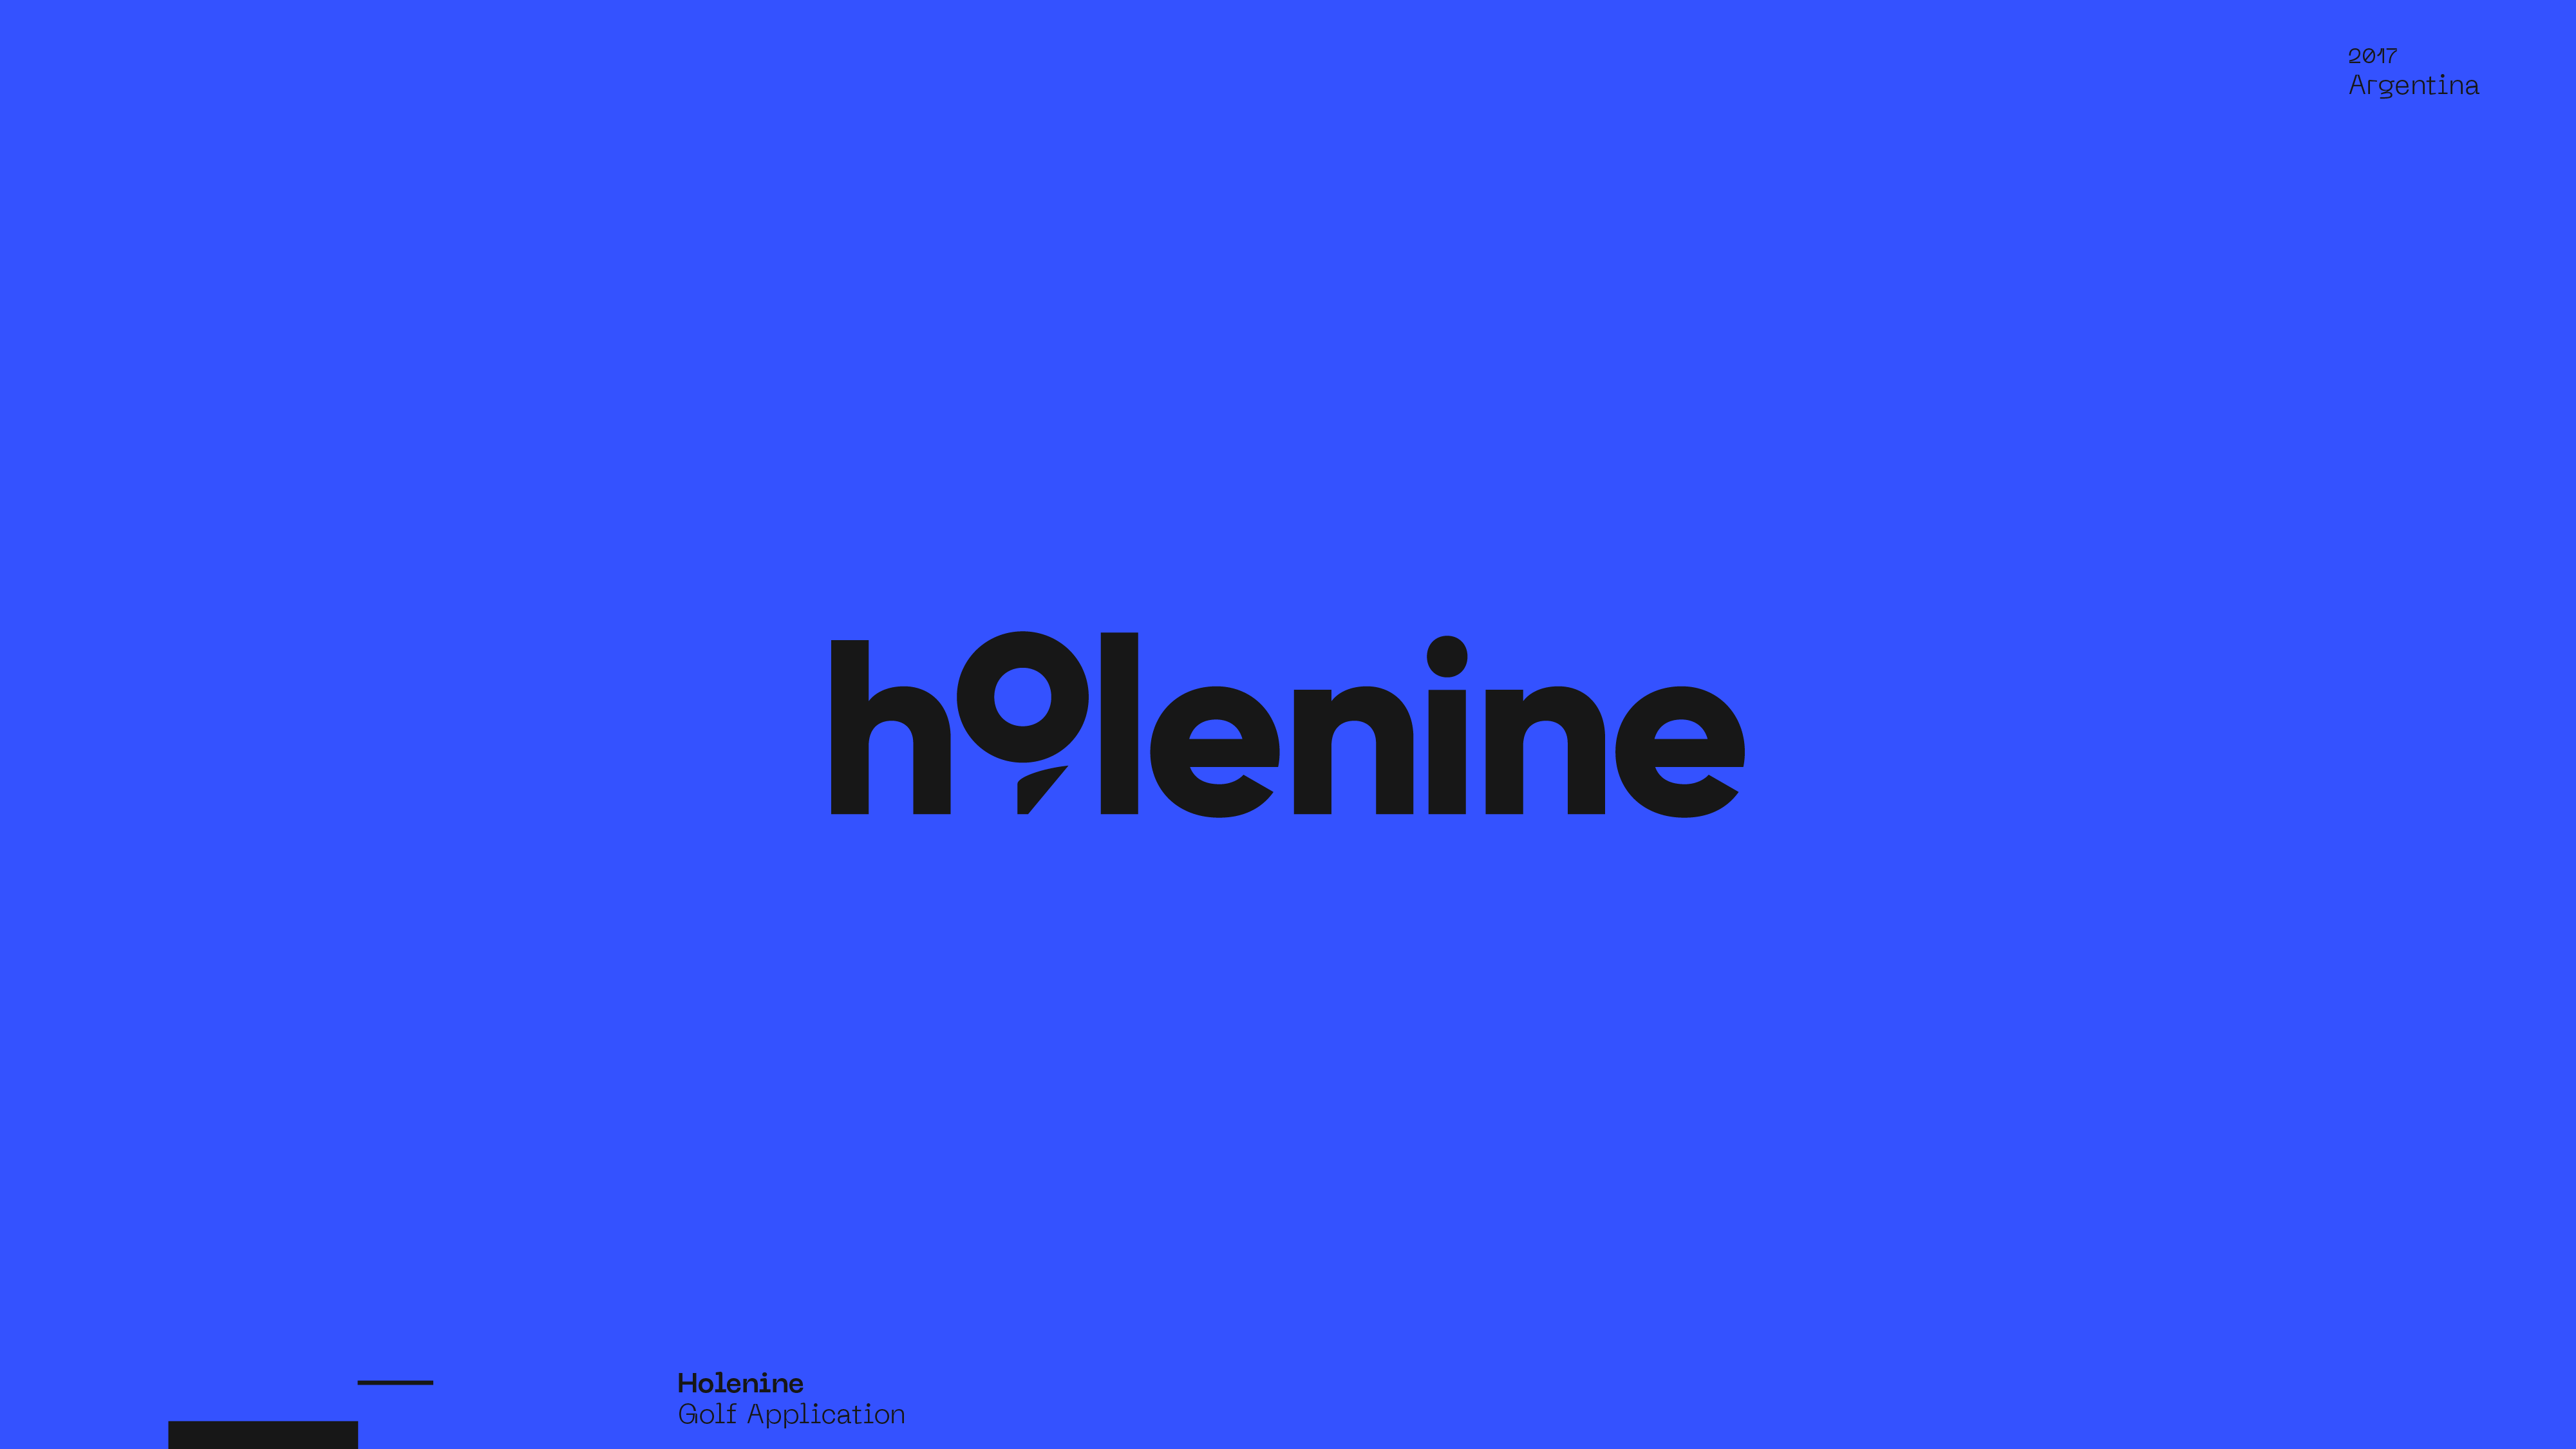 Guapo Design Studio by Esteban Ibarra Logofolio 2017 2018 logo designer —Holenine